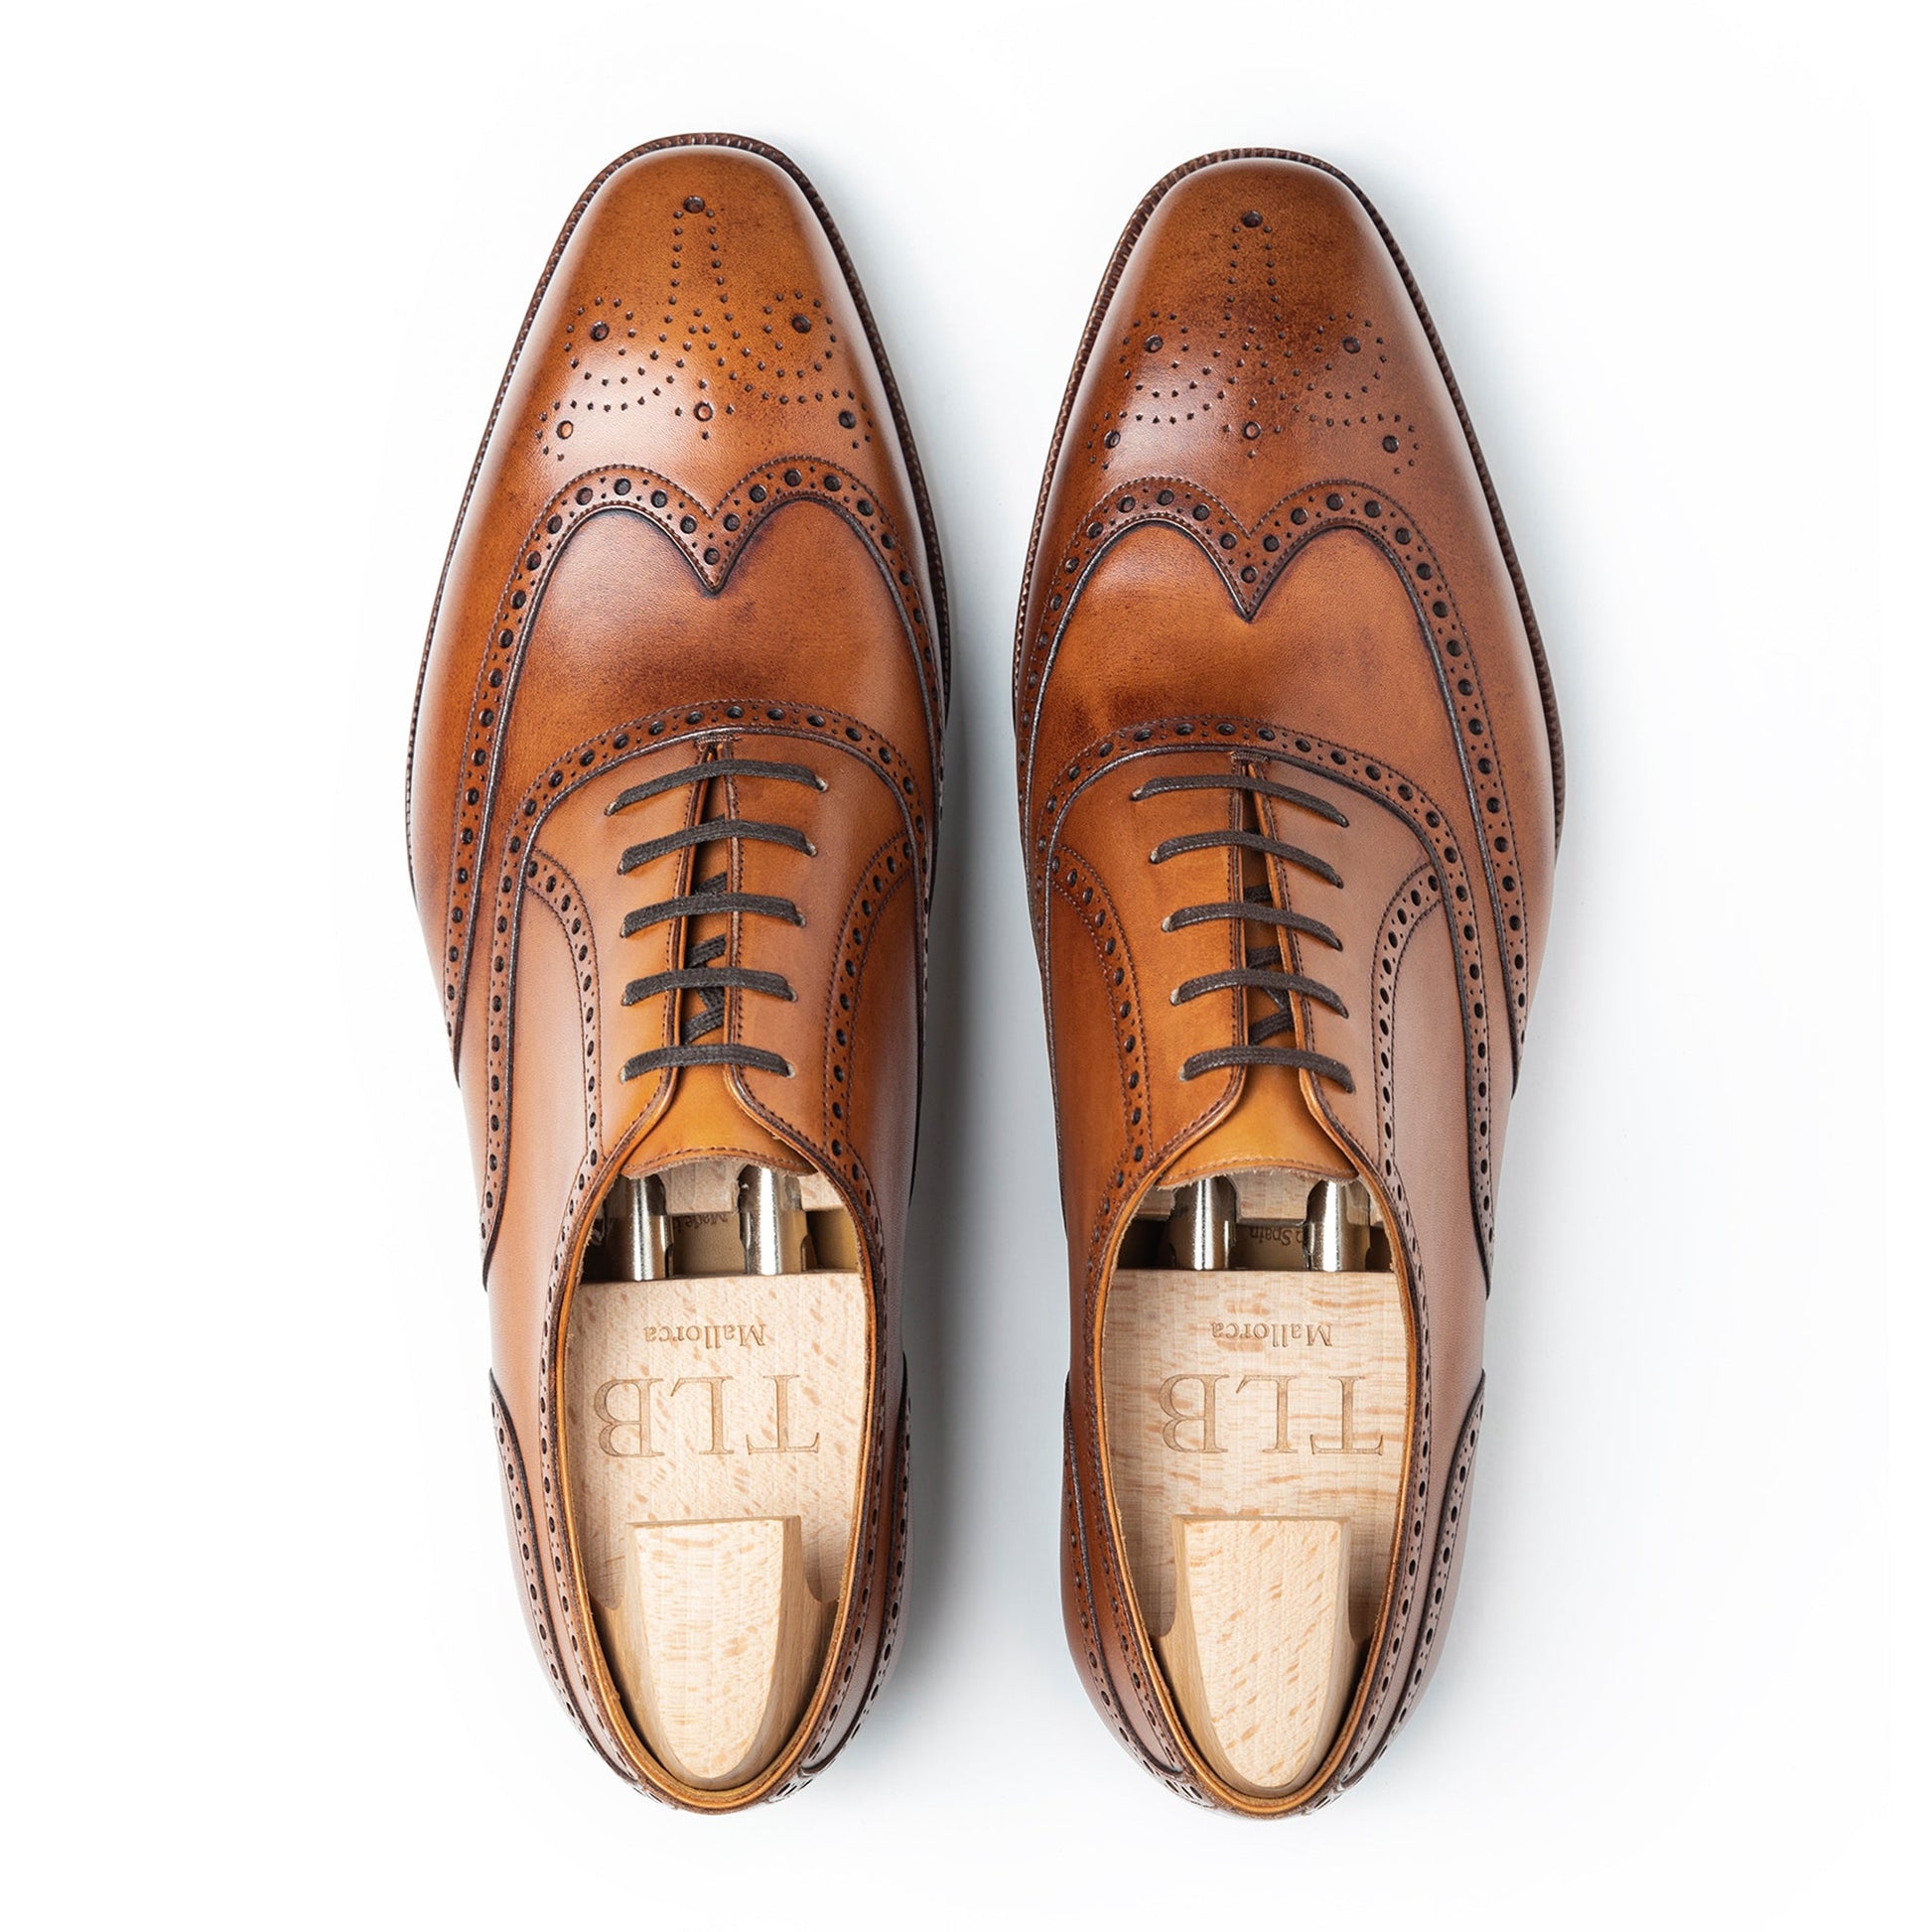 TLB Mallorca leather shoes - Men's wingtip shoes 